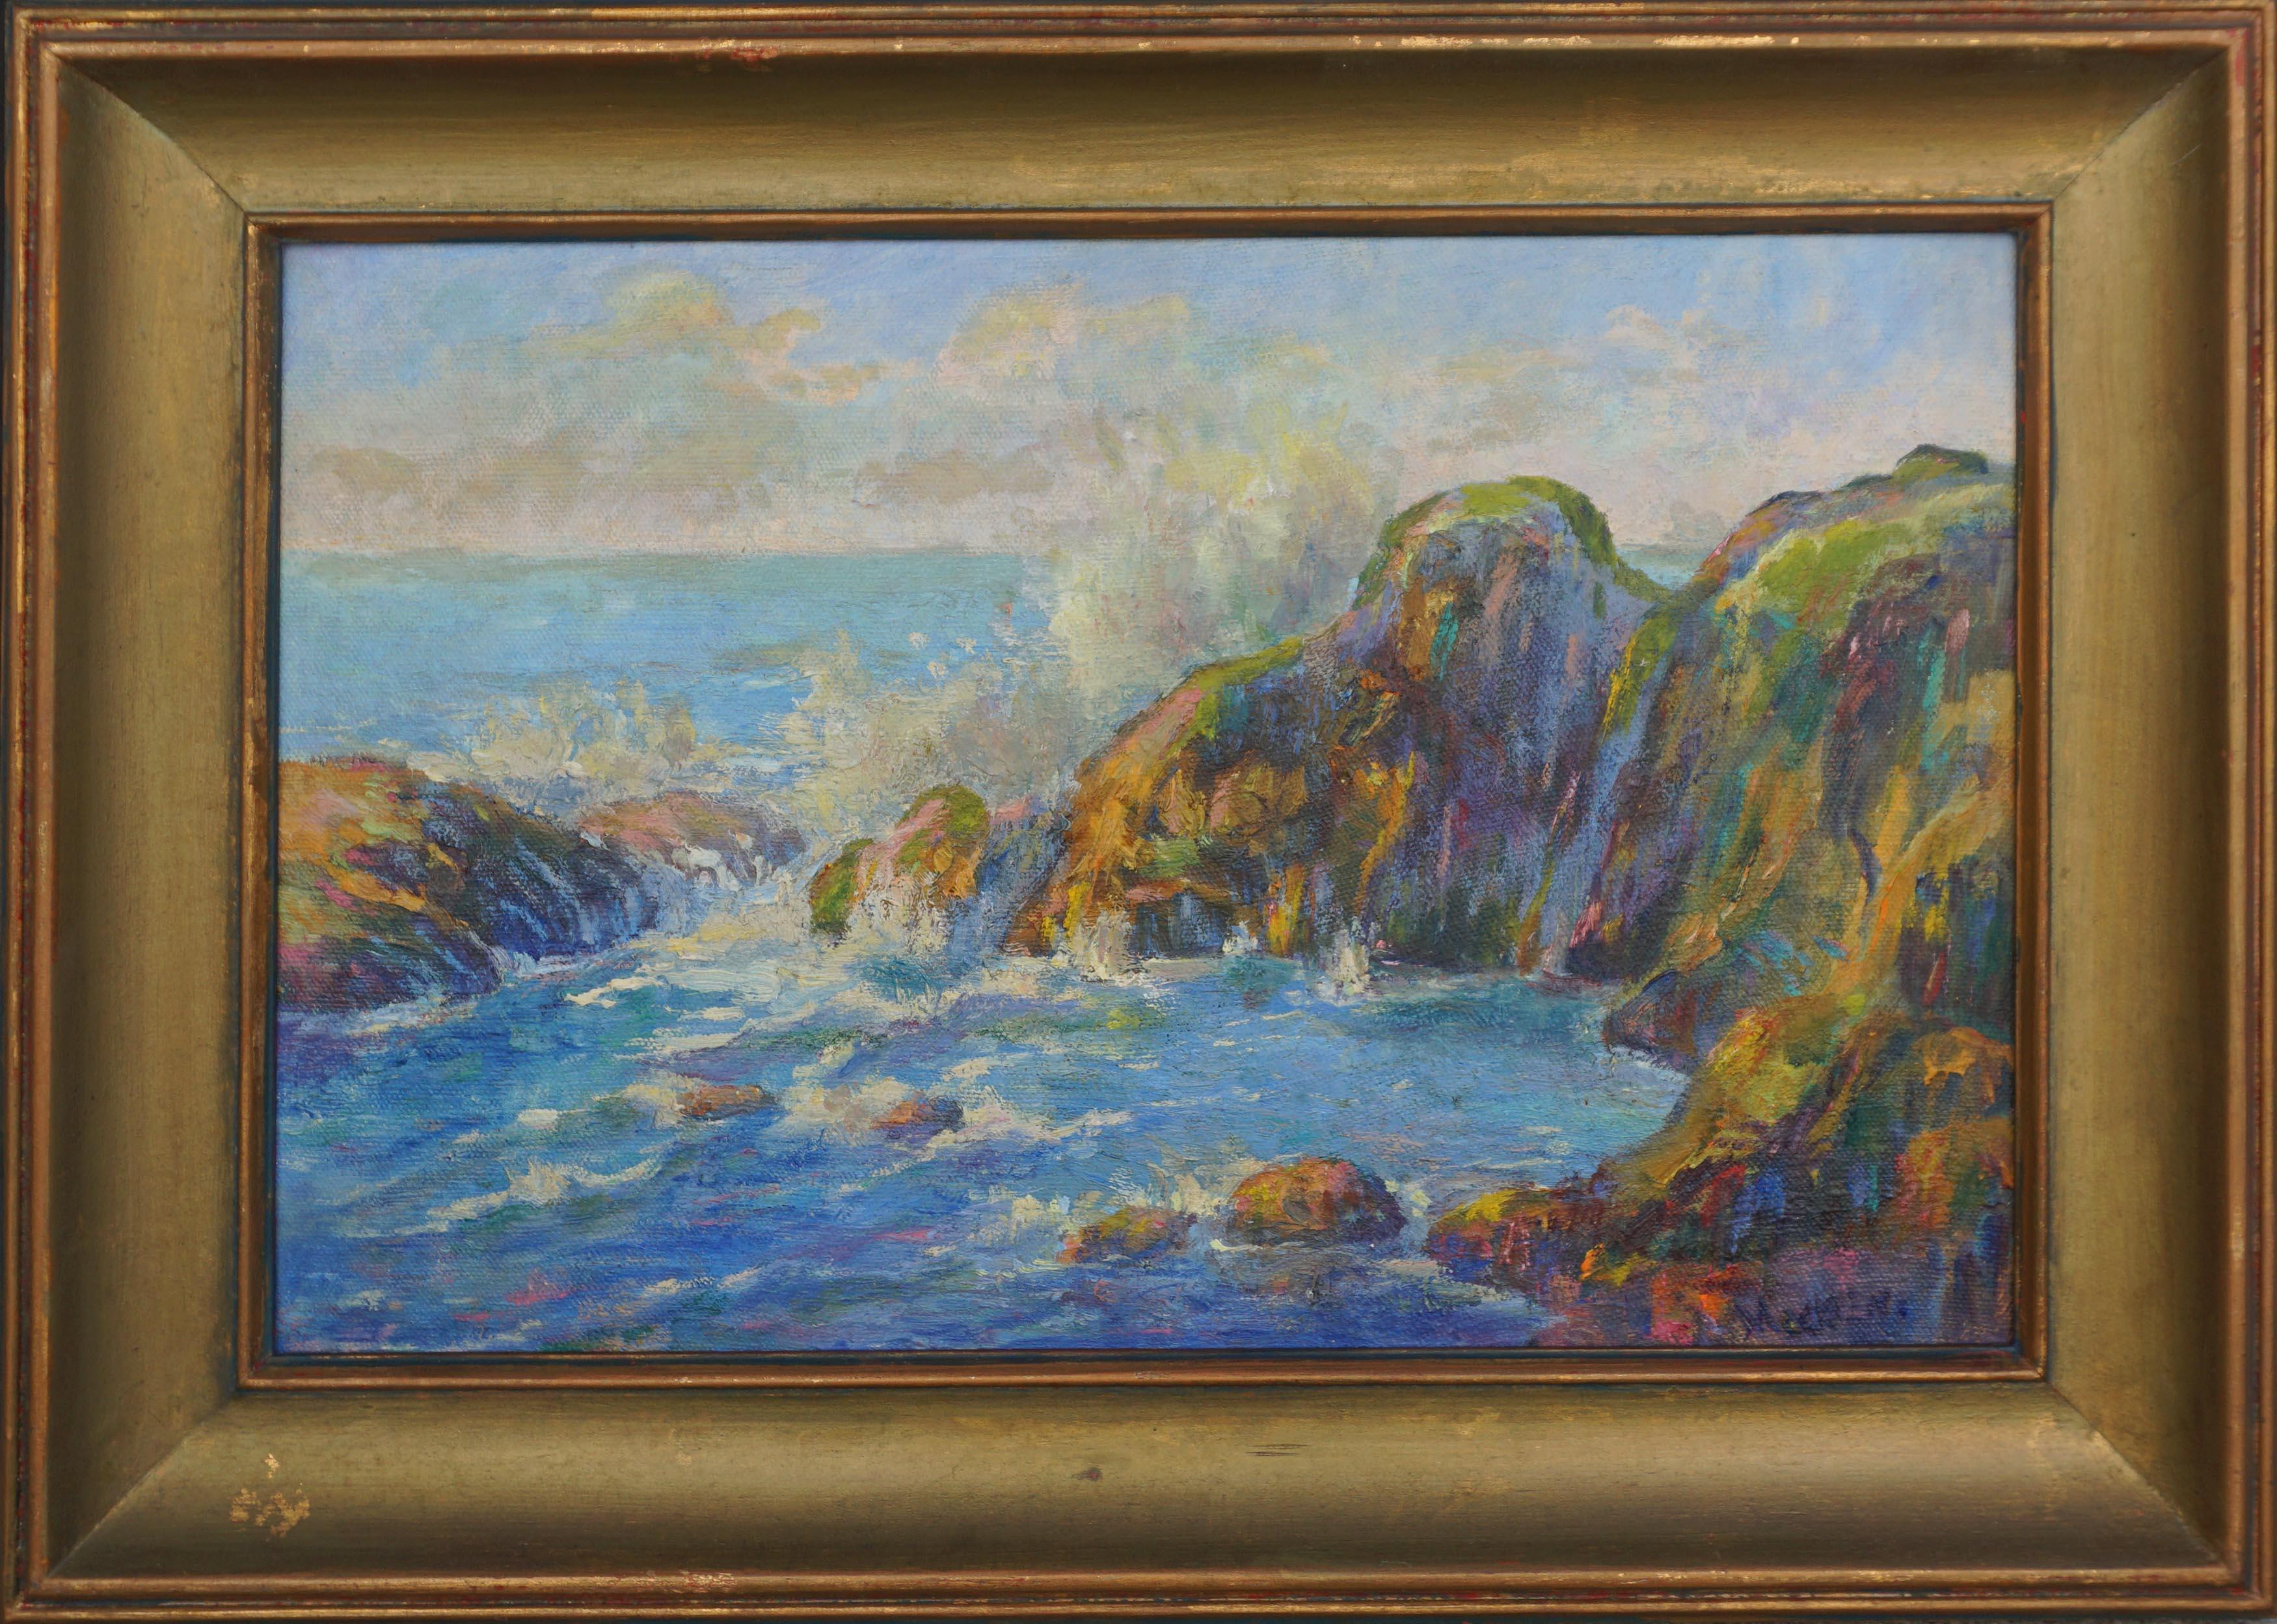 Lida Allen Macklin Landscape Painting - Early 20th Century Oregon Coast Seascape